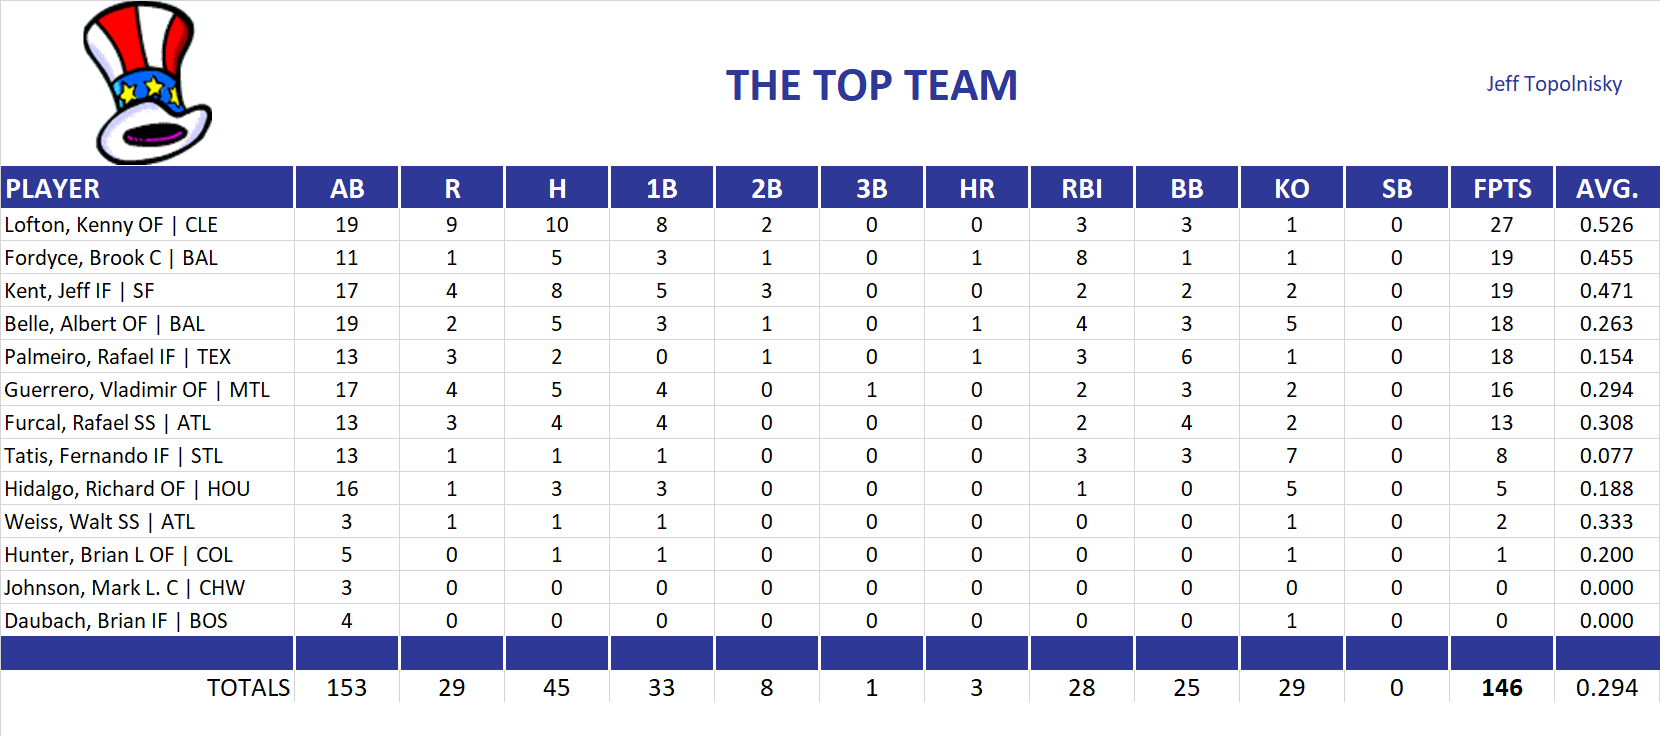 2000 Major League Baseball Pool Playoff Team Stats